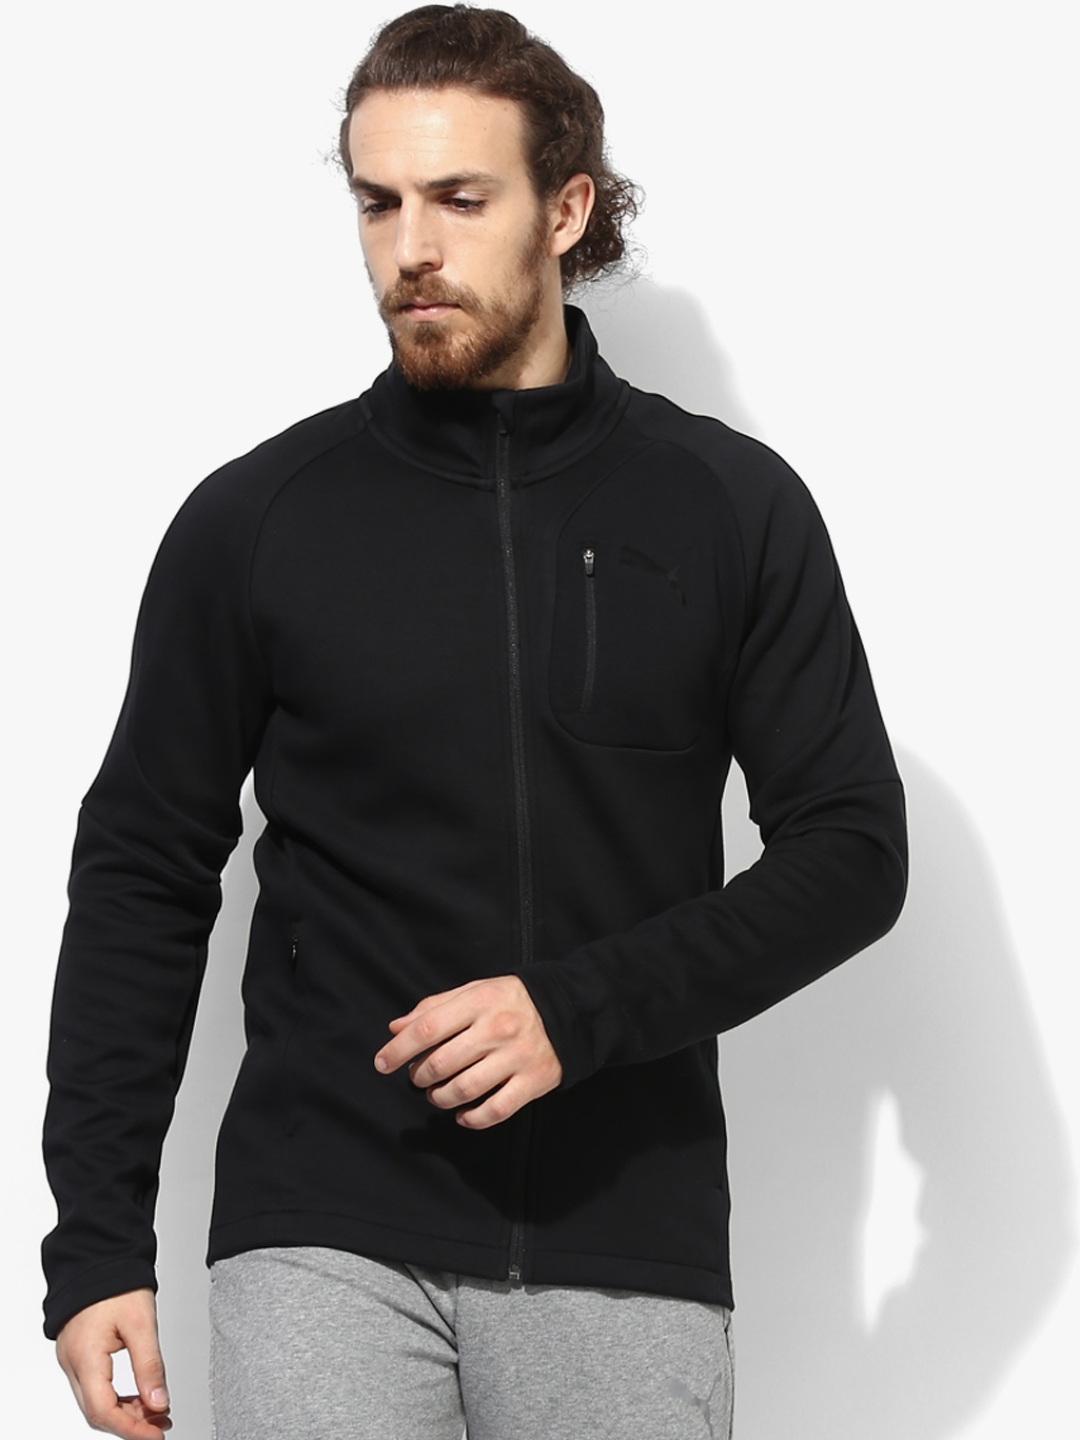 Buy Evostripe Move Jacket Black Sweat Jacket - Sweatshirts for Men ...